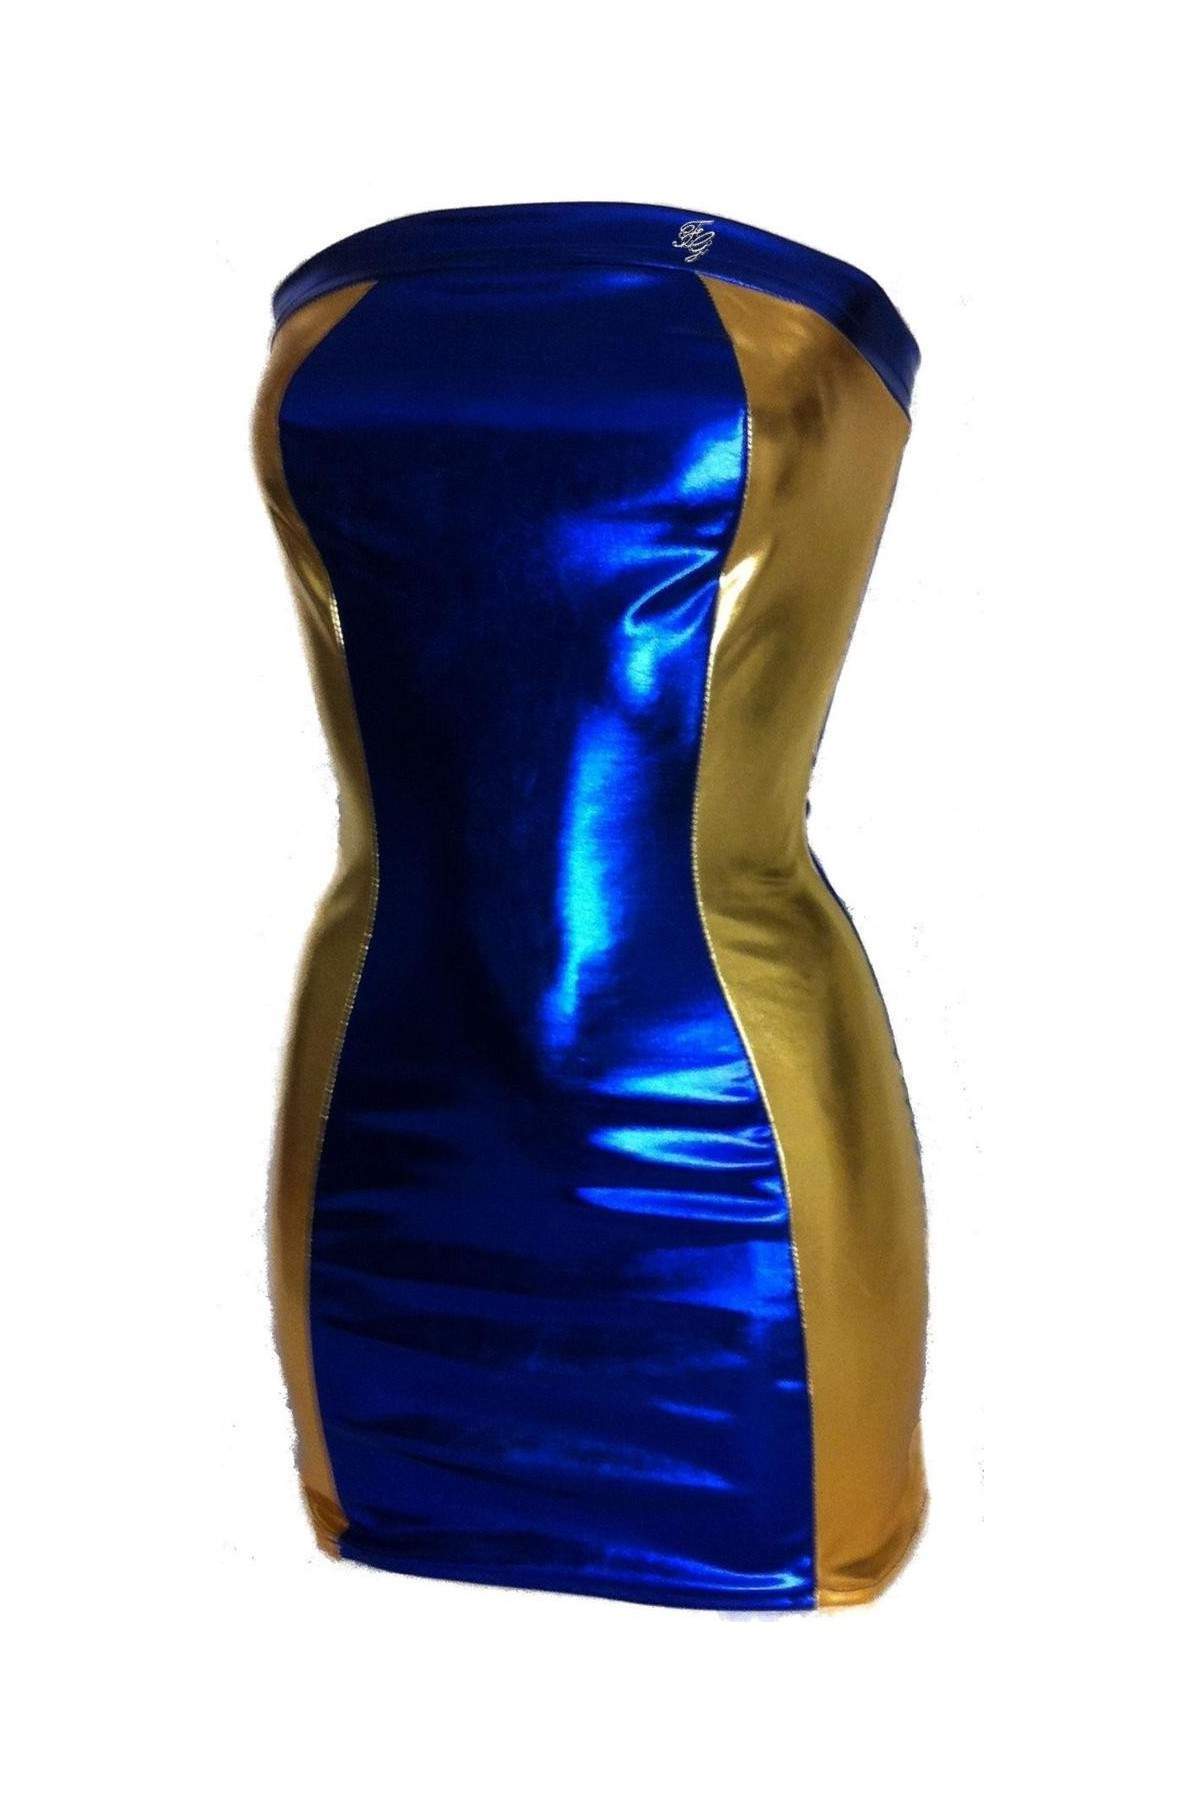 black week Save 15% Leather look dress blue gold metal effect - 